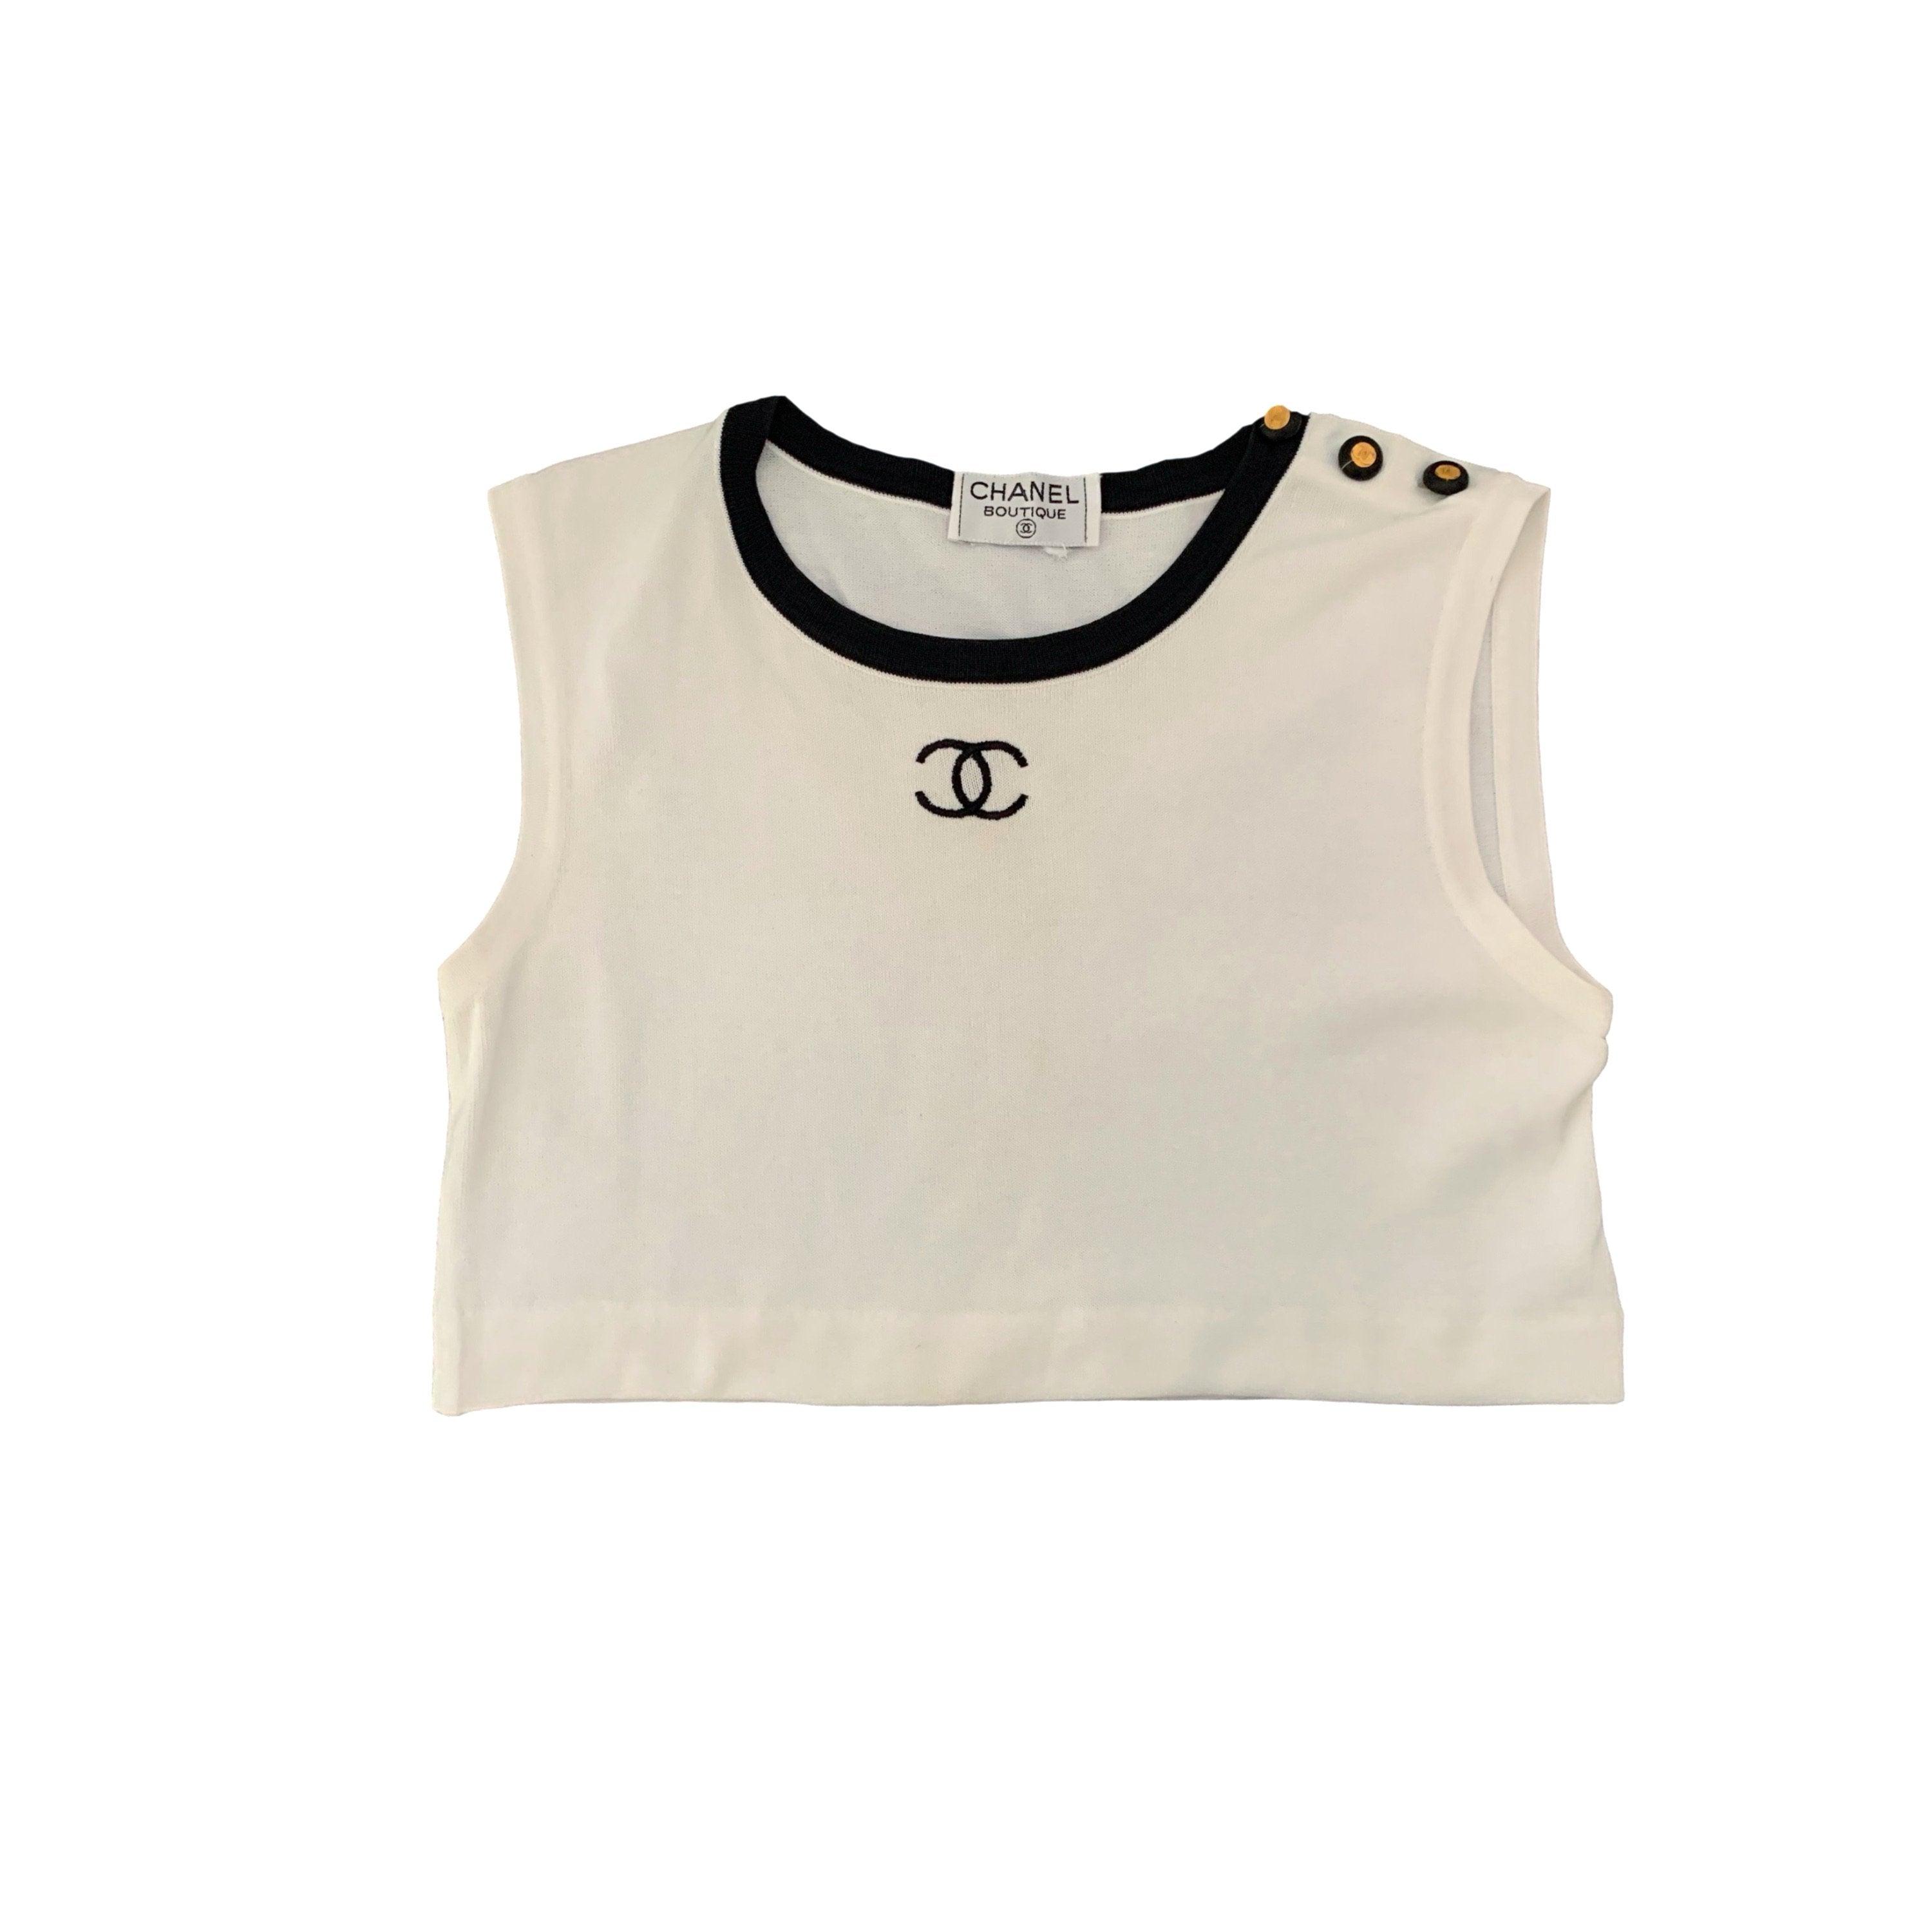 Chanel Logo Cropped Sports Bra Top